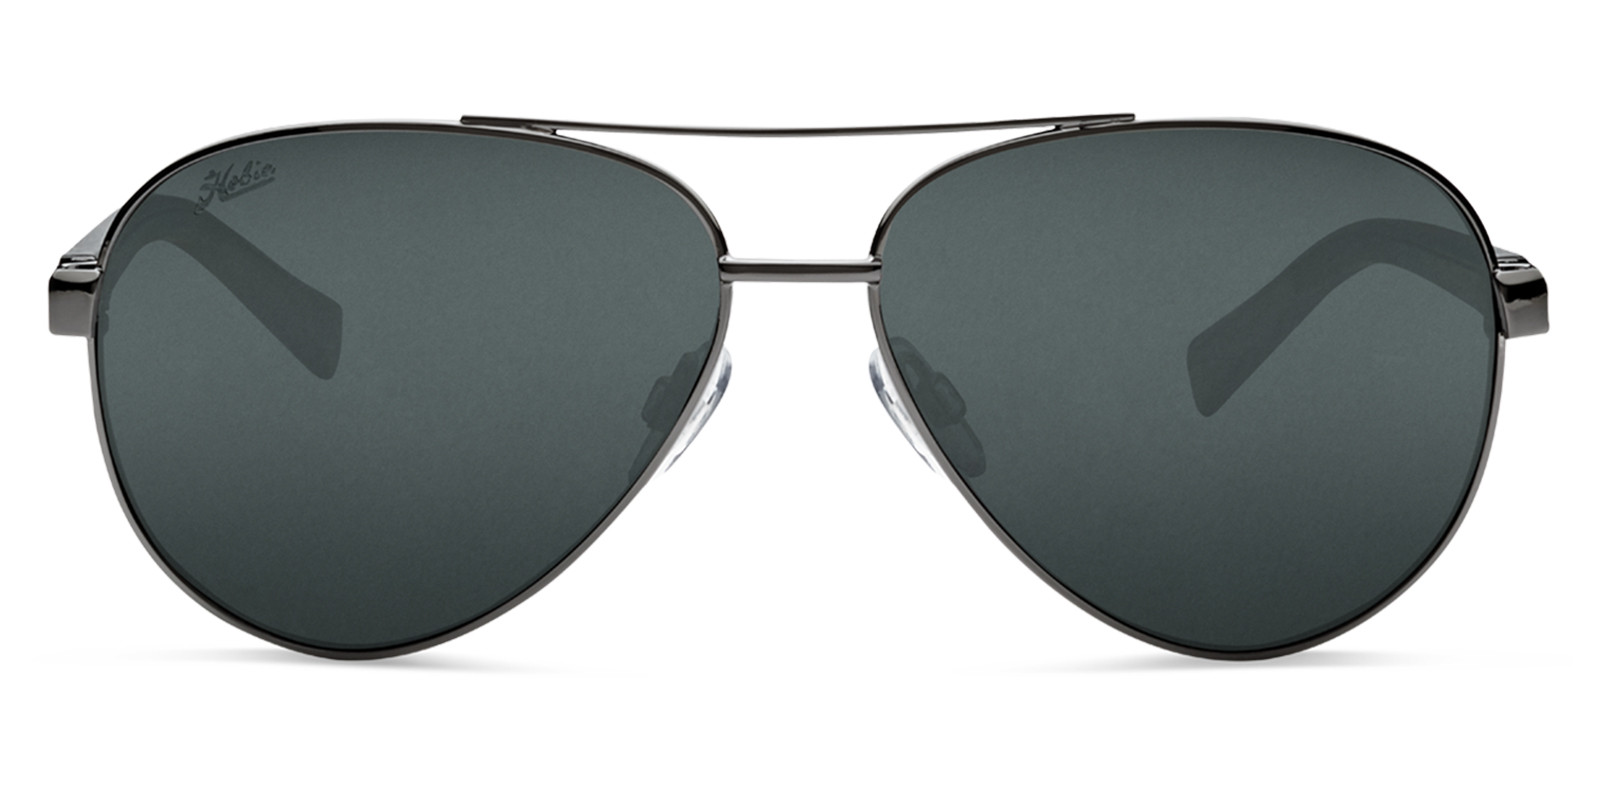 Hobie Drift Matte Black Polarized Floating Sunglasses